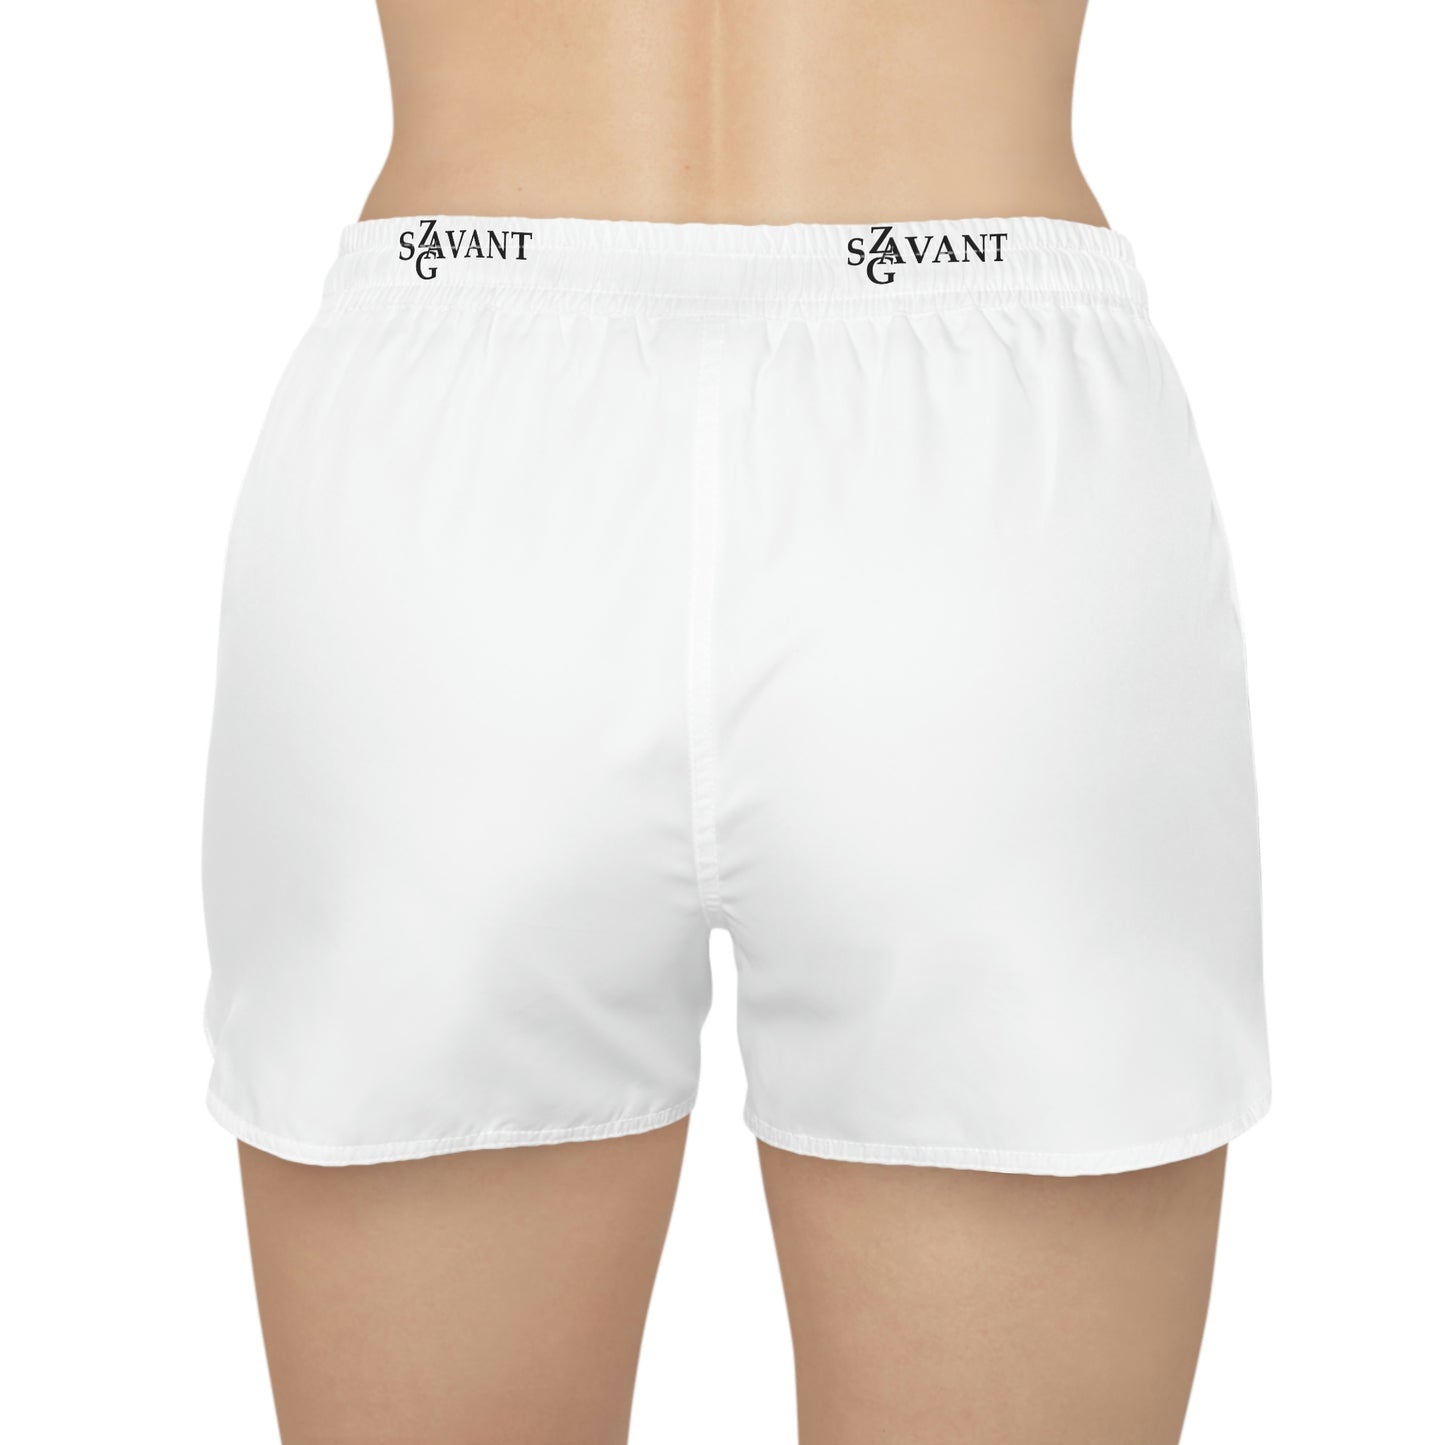 Women's casual drawstring shorts - White